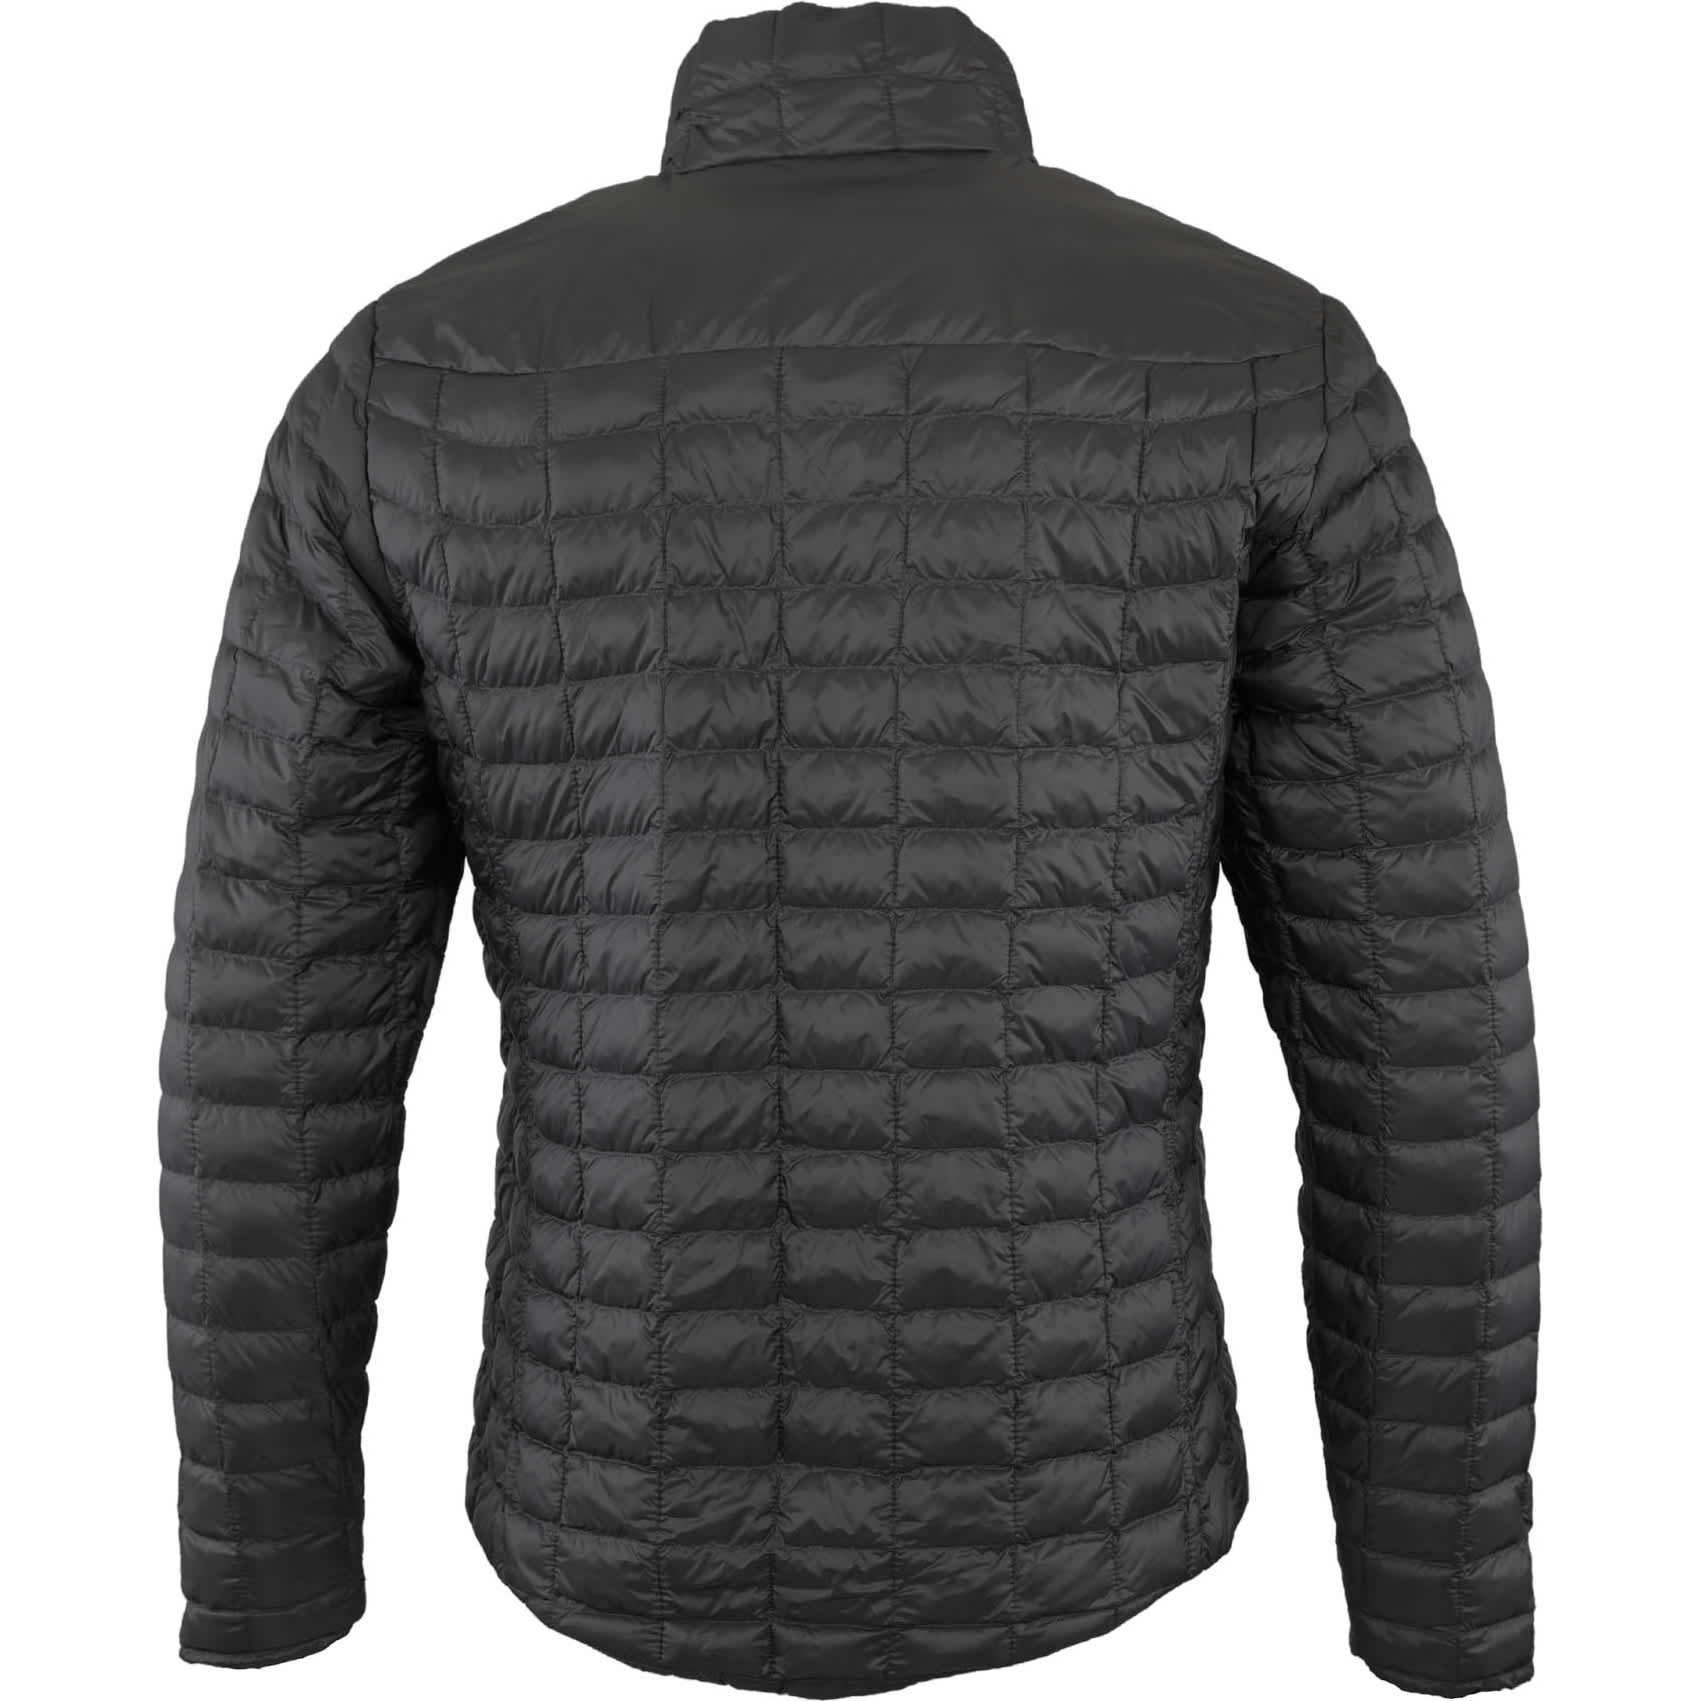 Fieldsheer® Men’s Backcountry Heated Jacket